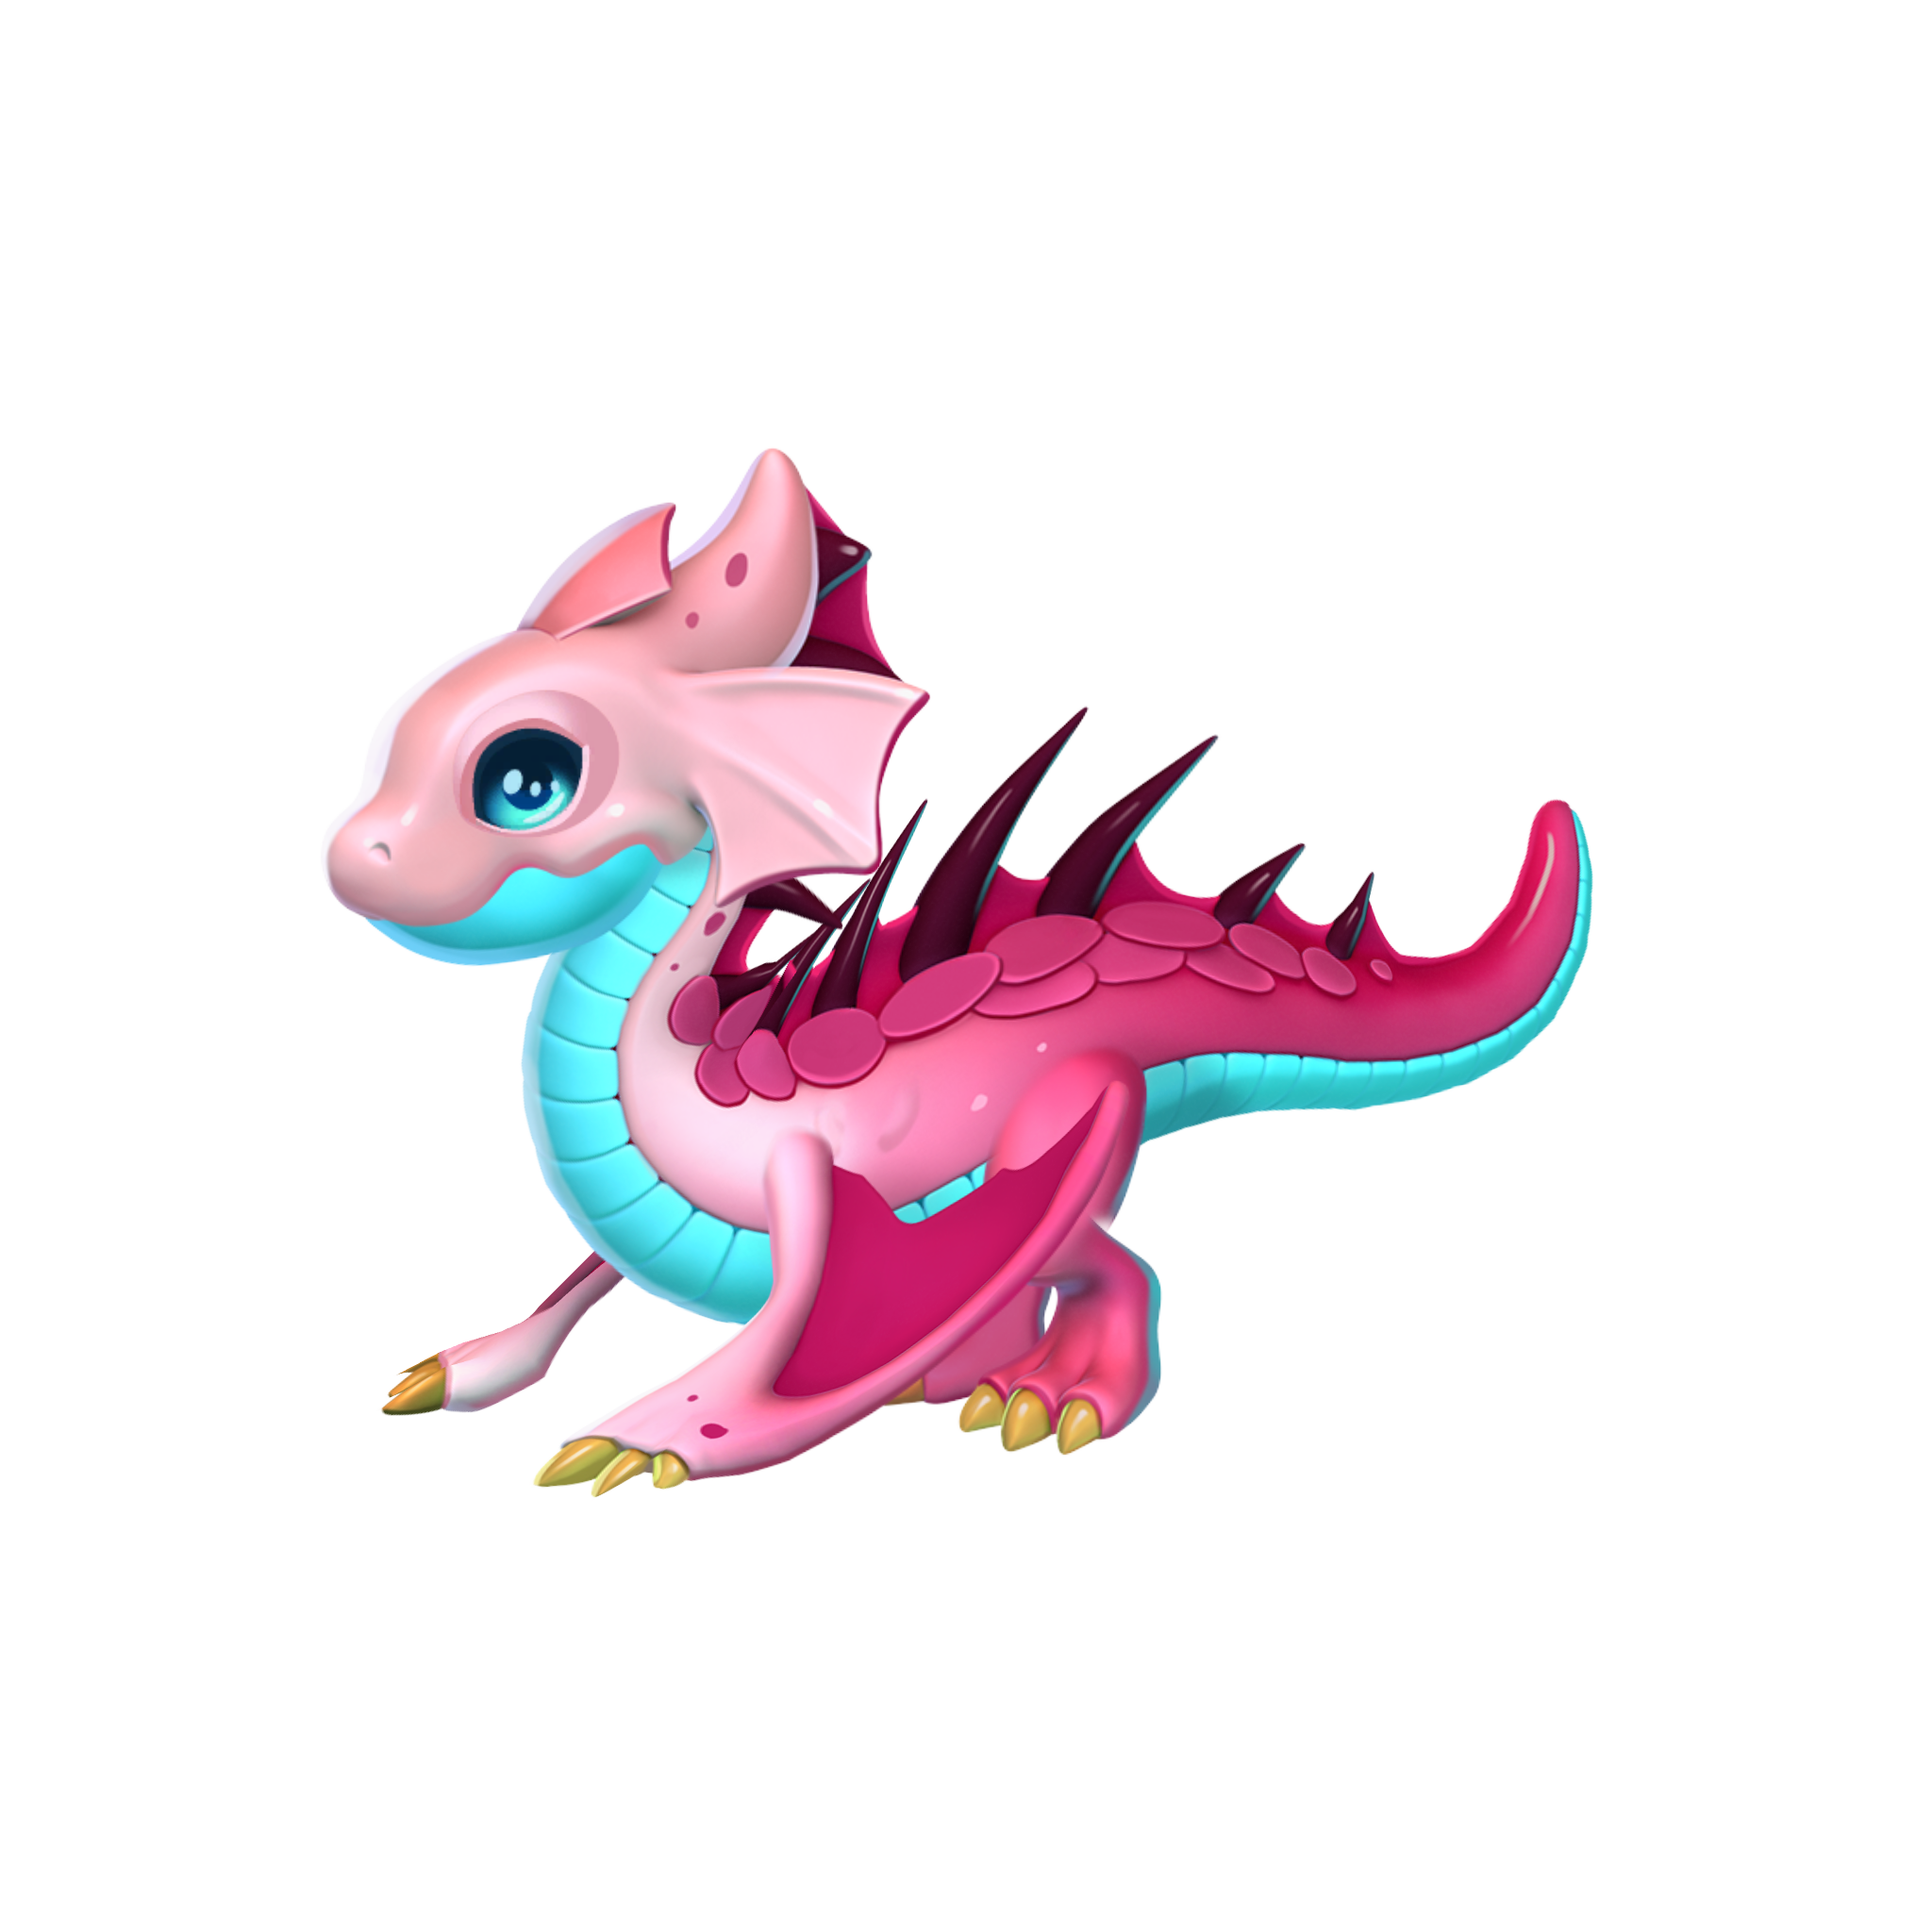 Mania legends wikipedia megatron. Clipart dragon pink dragon